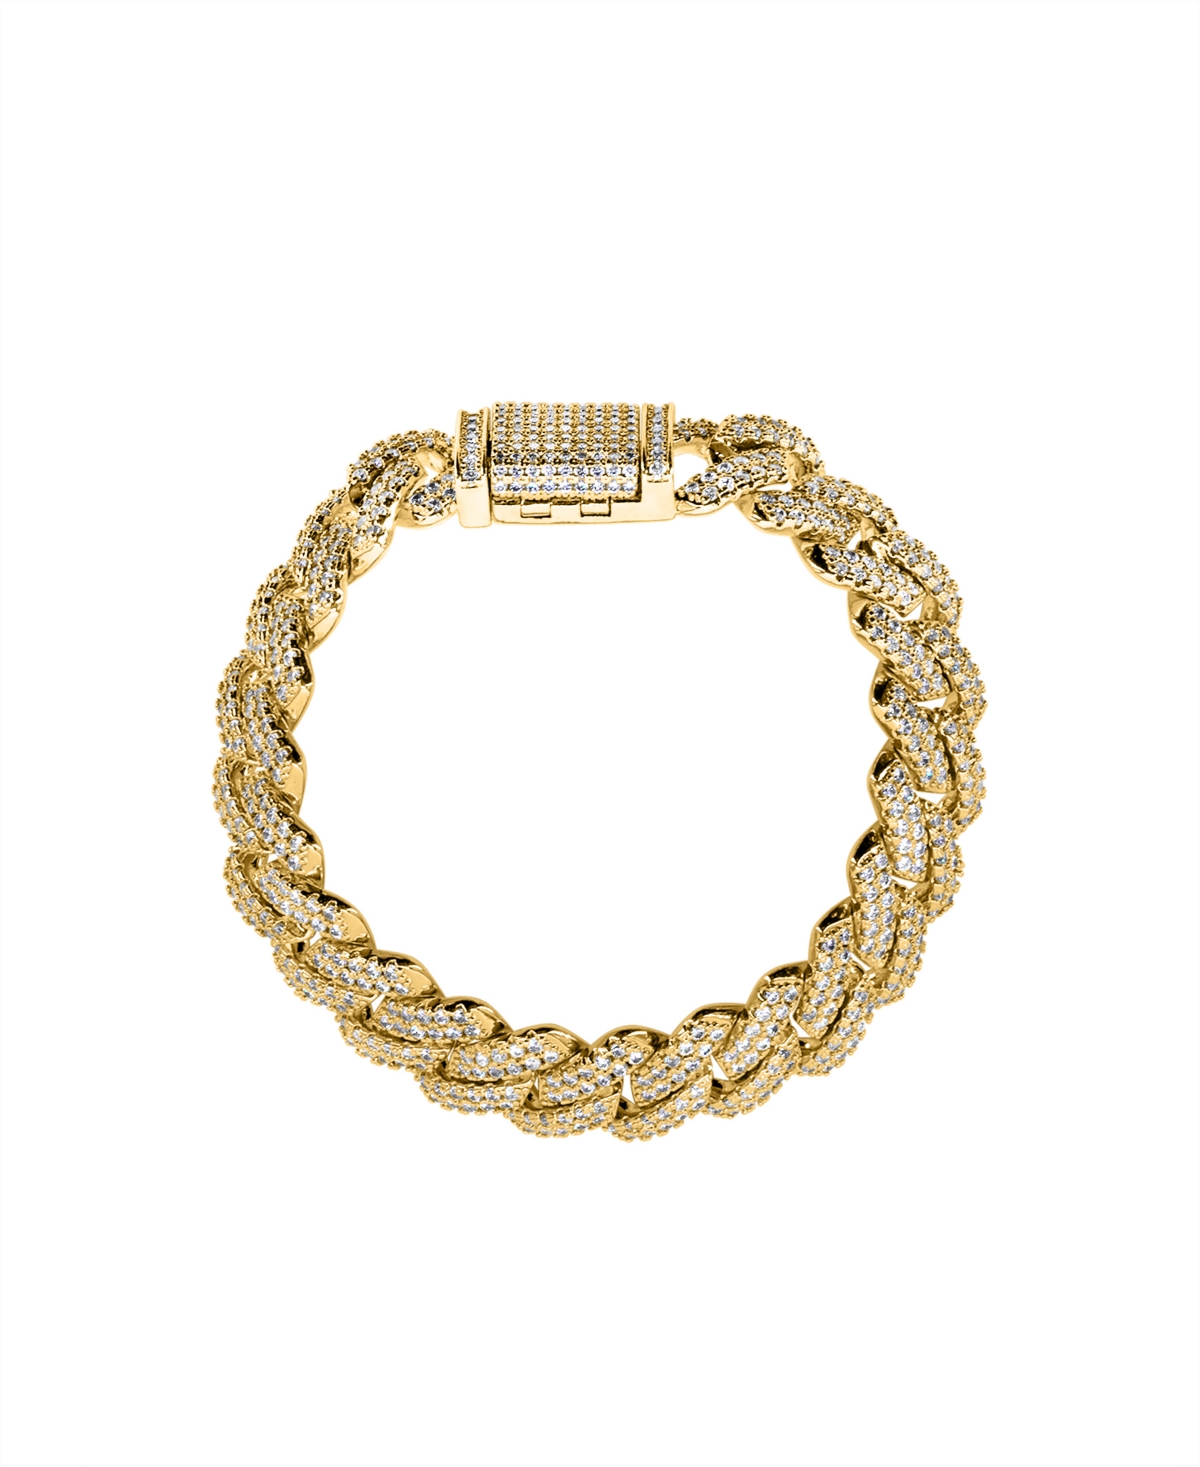 Frosty Link Collection Bracelet - Gold Tone